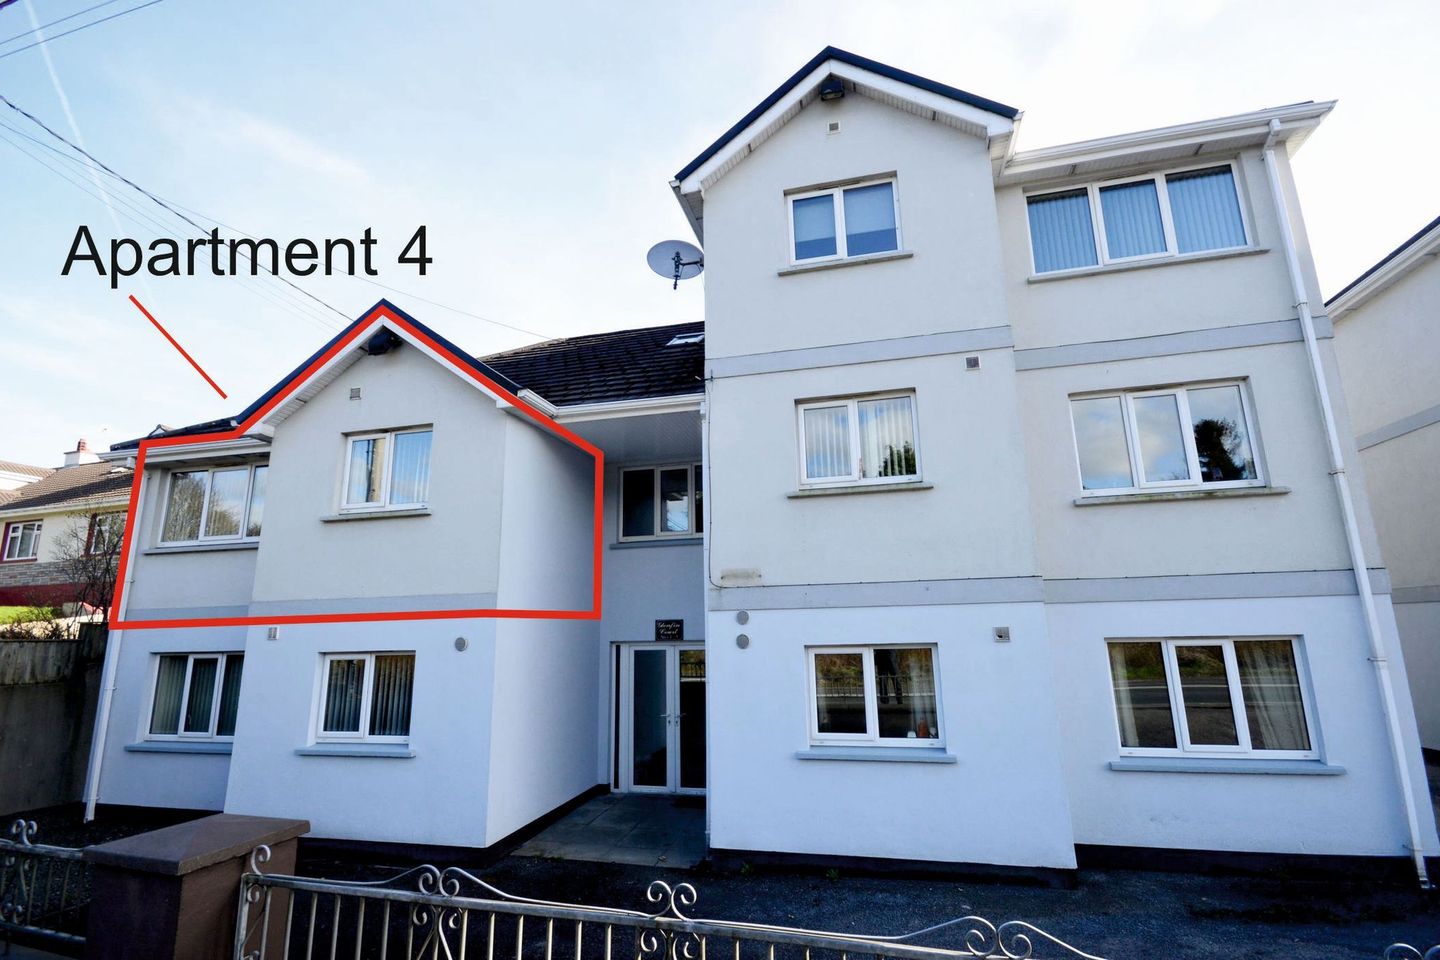 Apartment 4, Glenfin Court, Ballybofey, Co. Donegal, F93X073